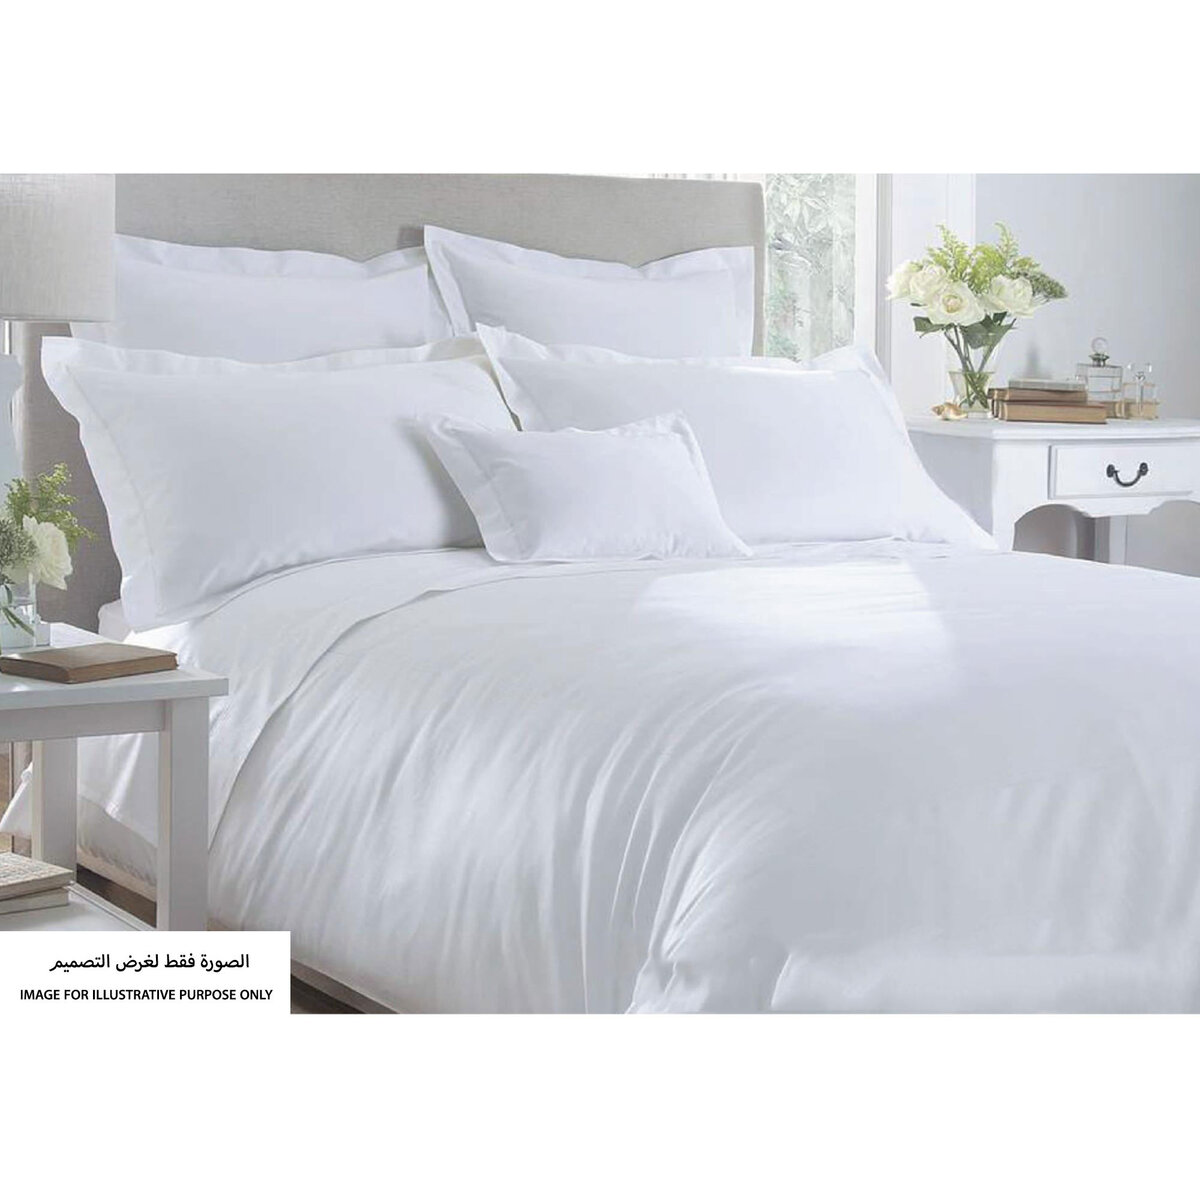 Homewell King Comforter 4pc Set White